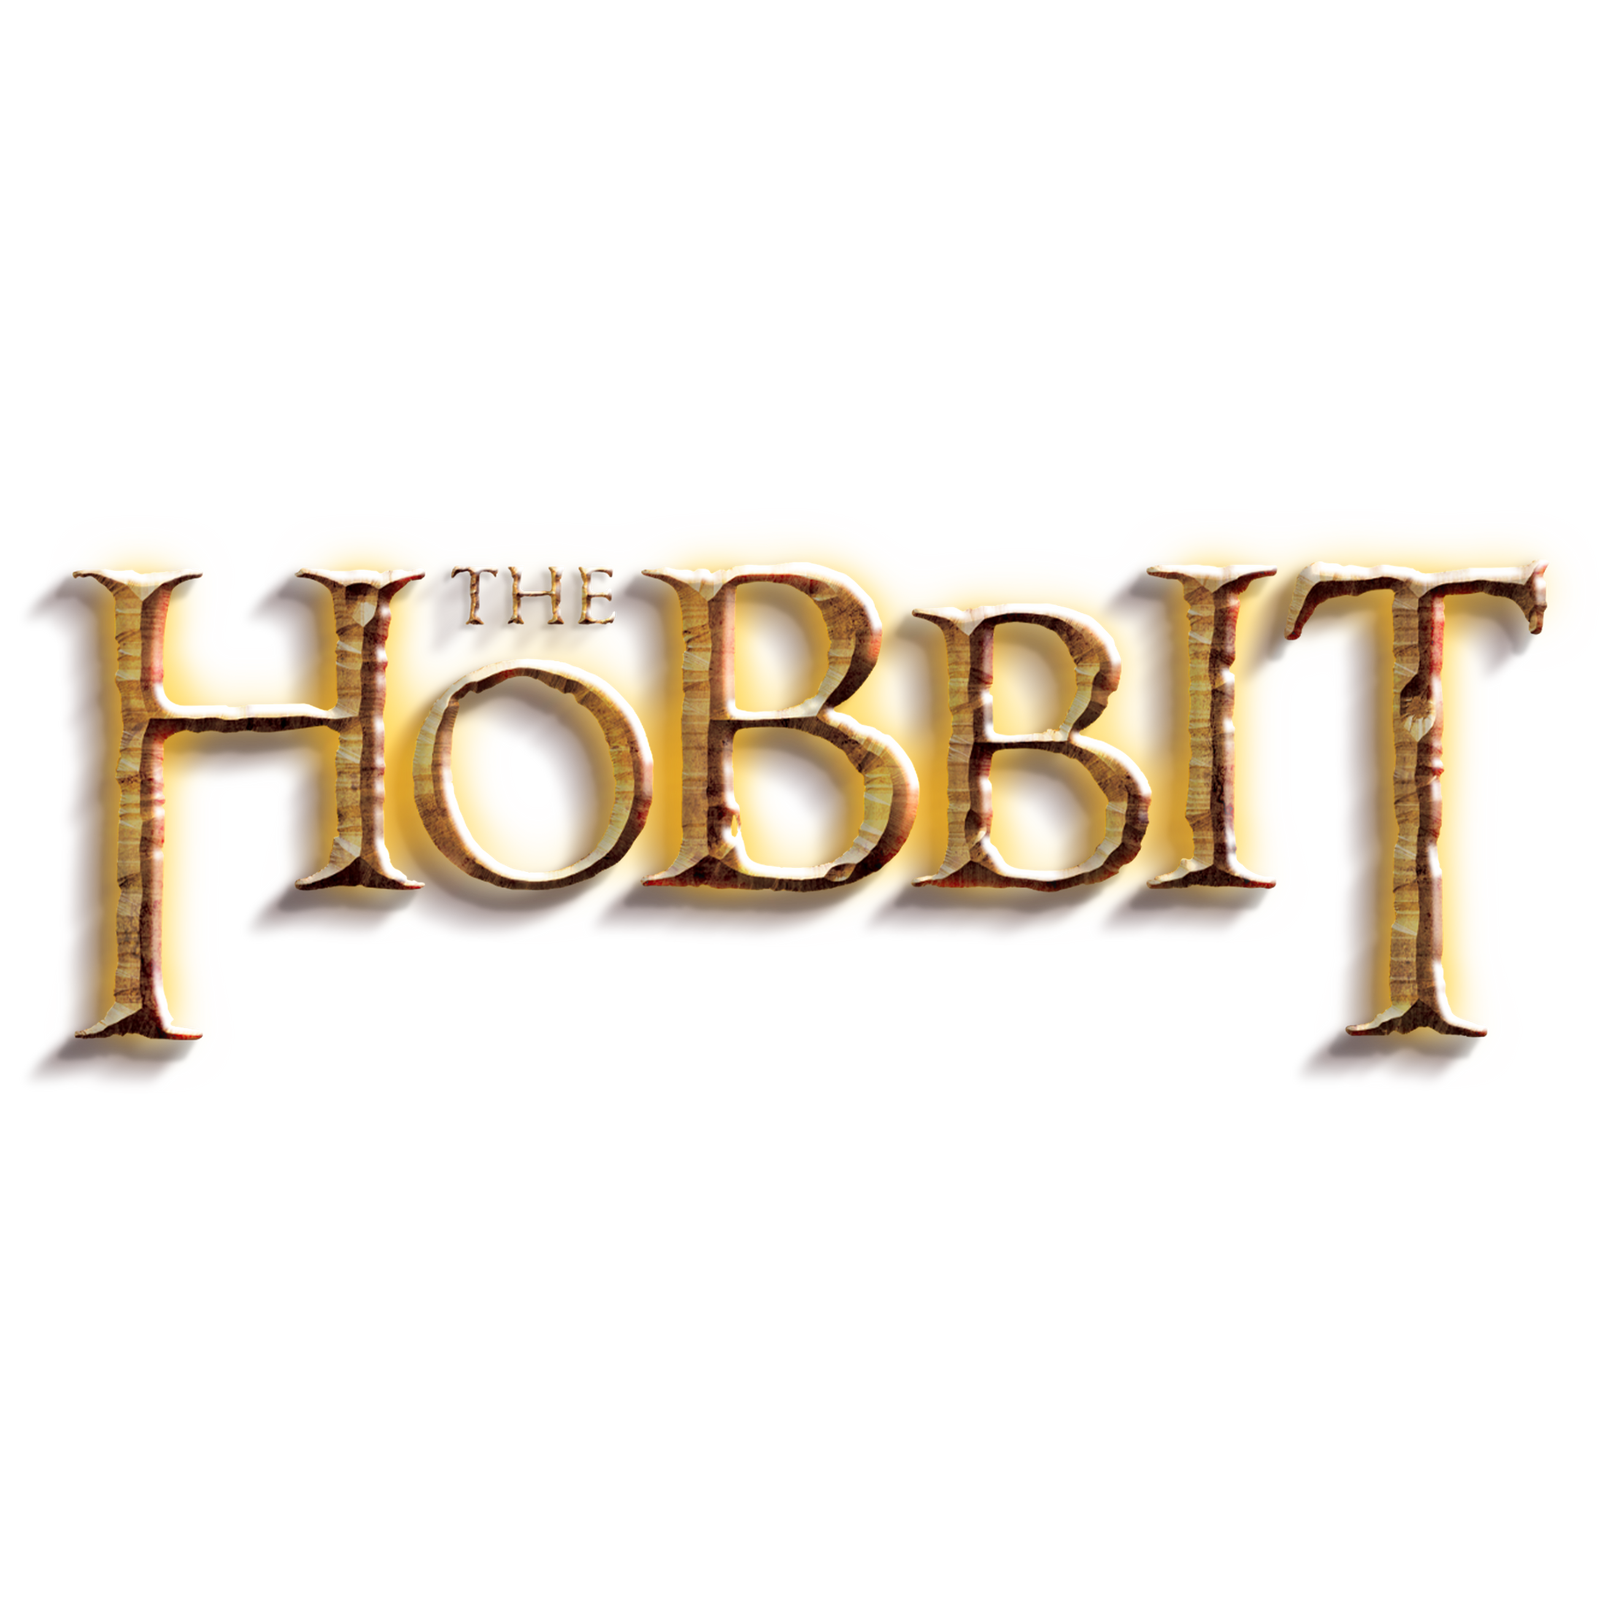 The Hobbit logo.